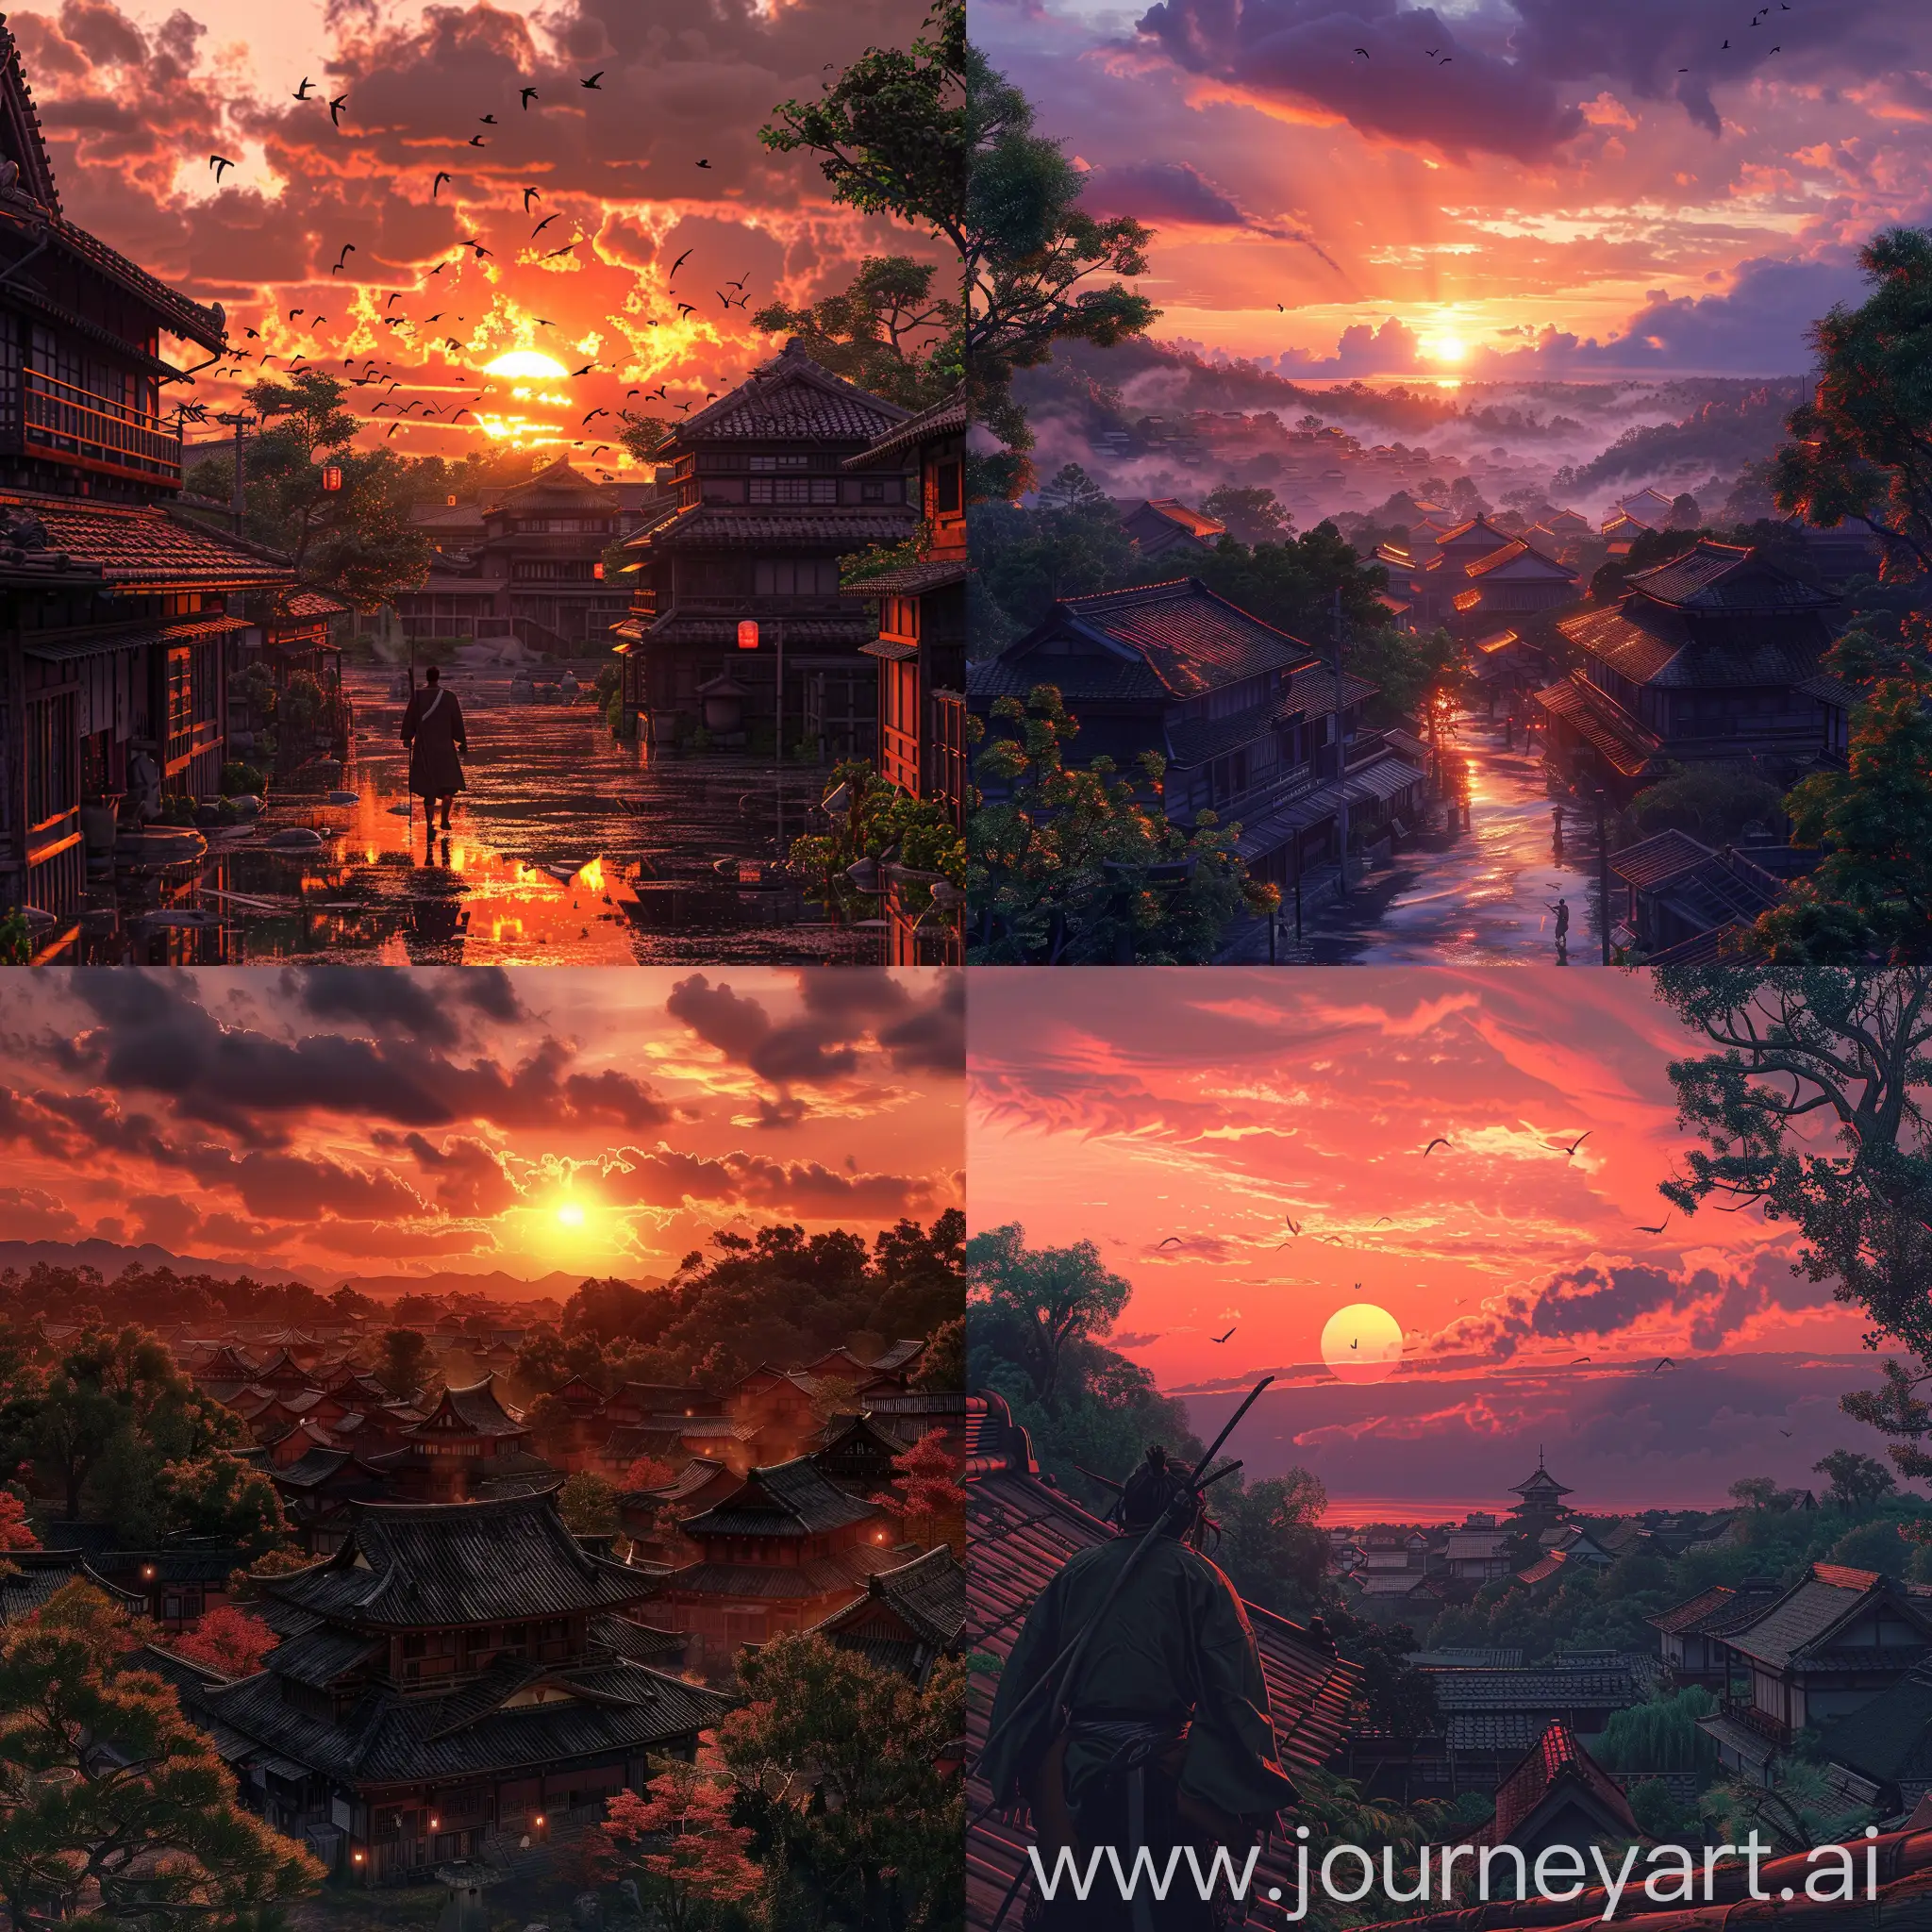 Samurai-Village-at-Sunset-HyperRealistic-Anime-8K-Art